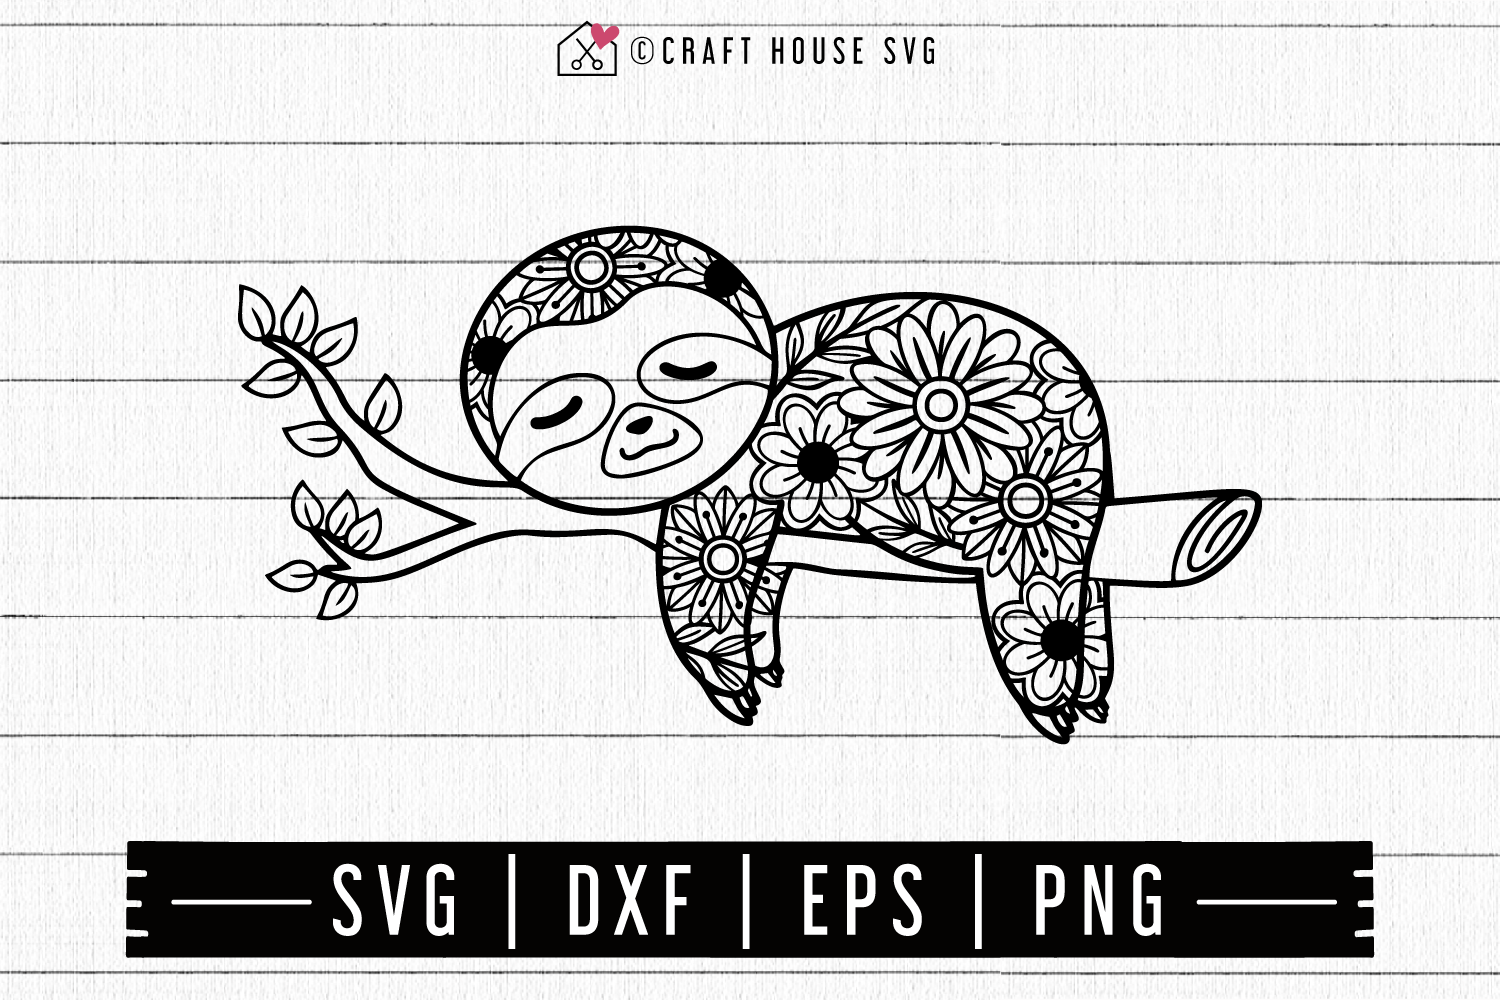 FREE Sloth Mandala SVG - Craft House SVG